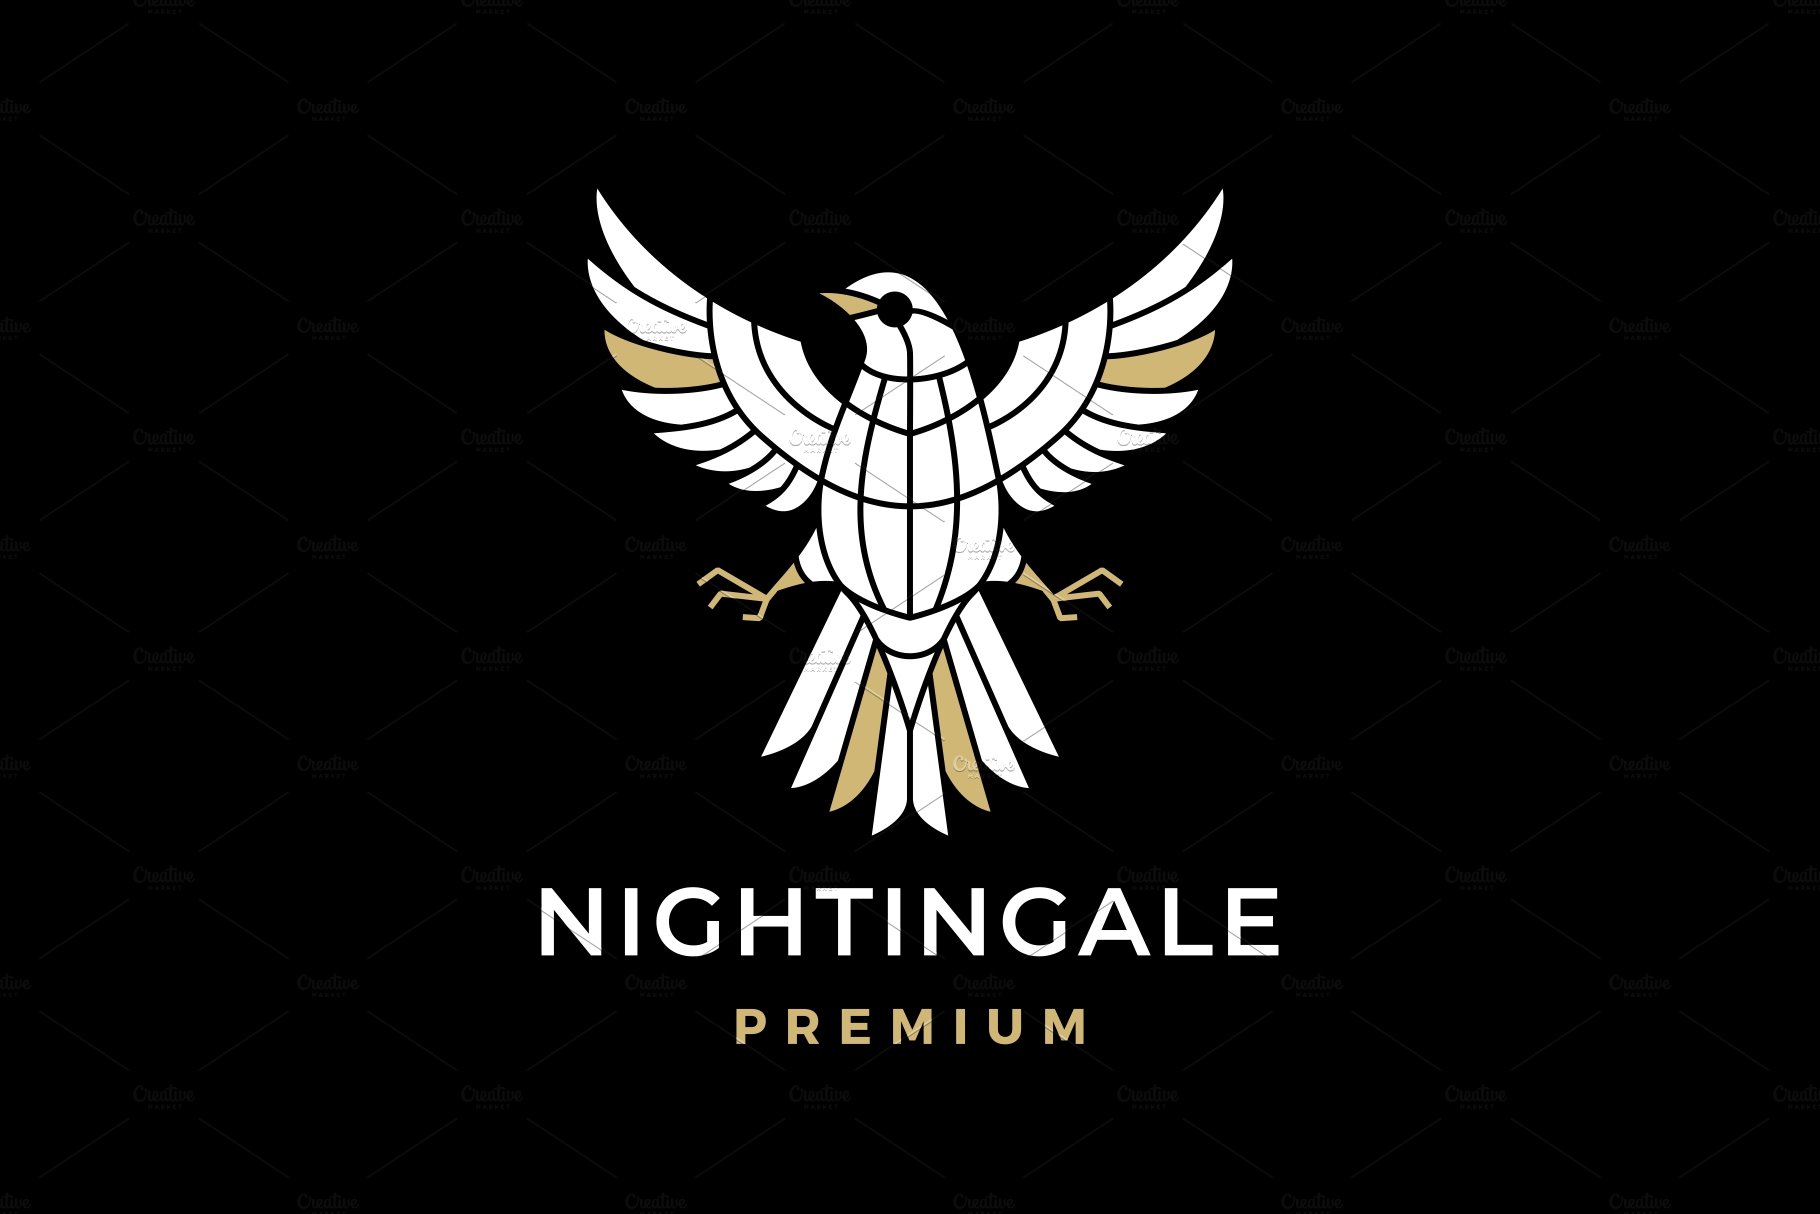 nightingale bird logo vector icon cover image.